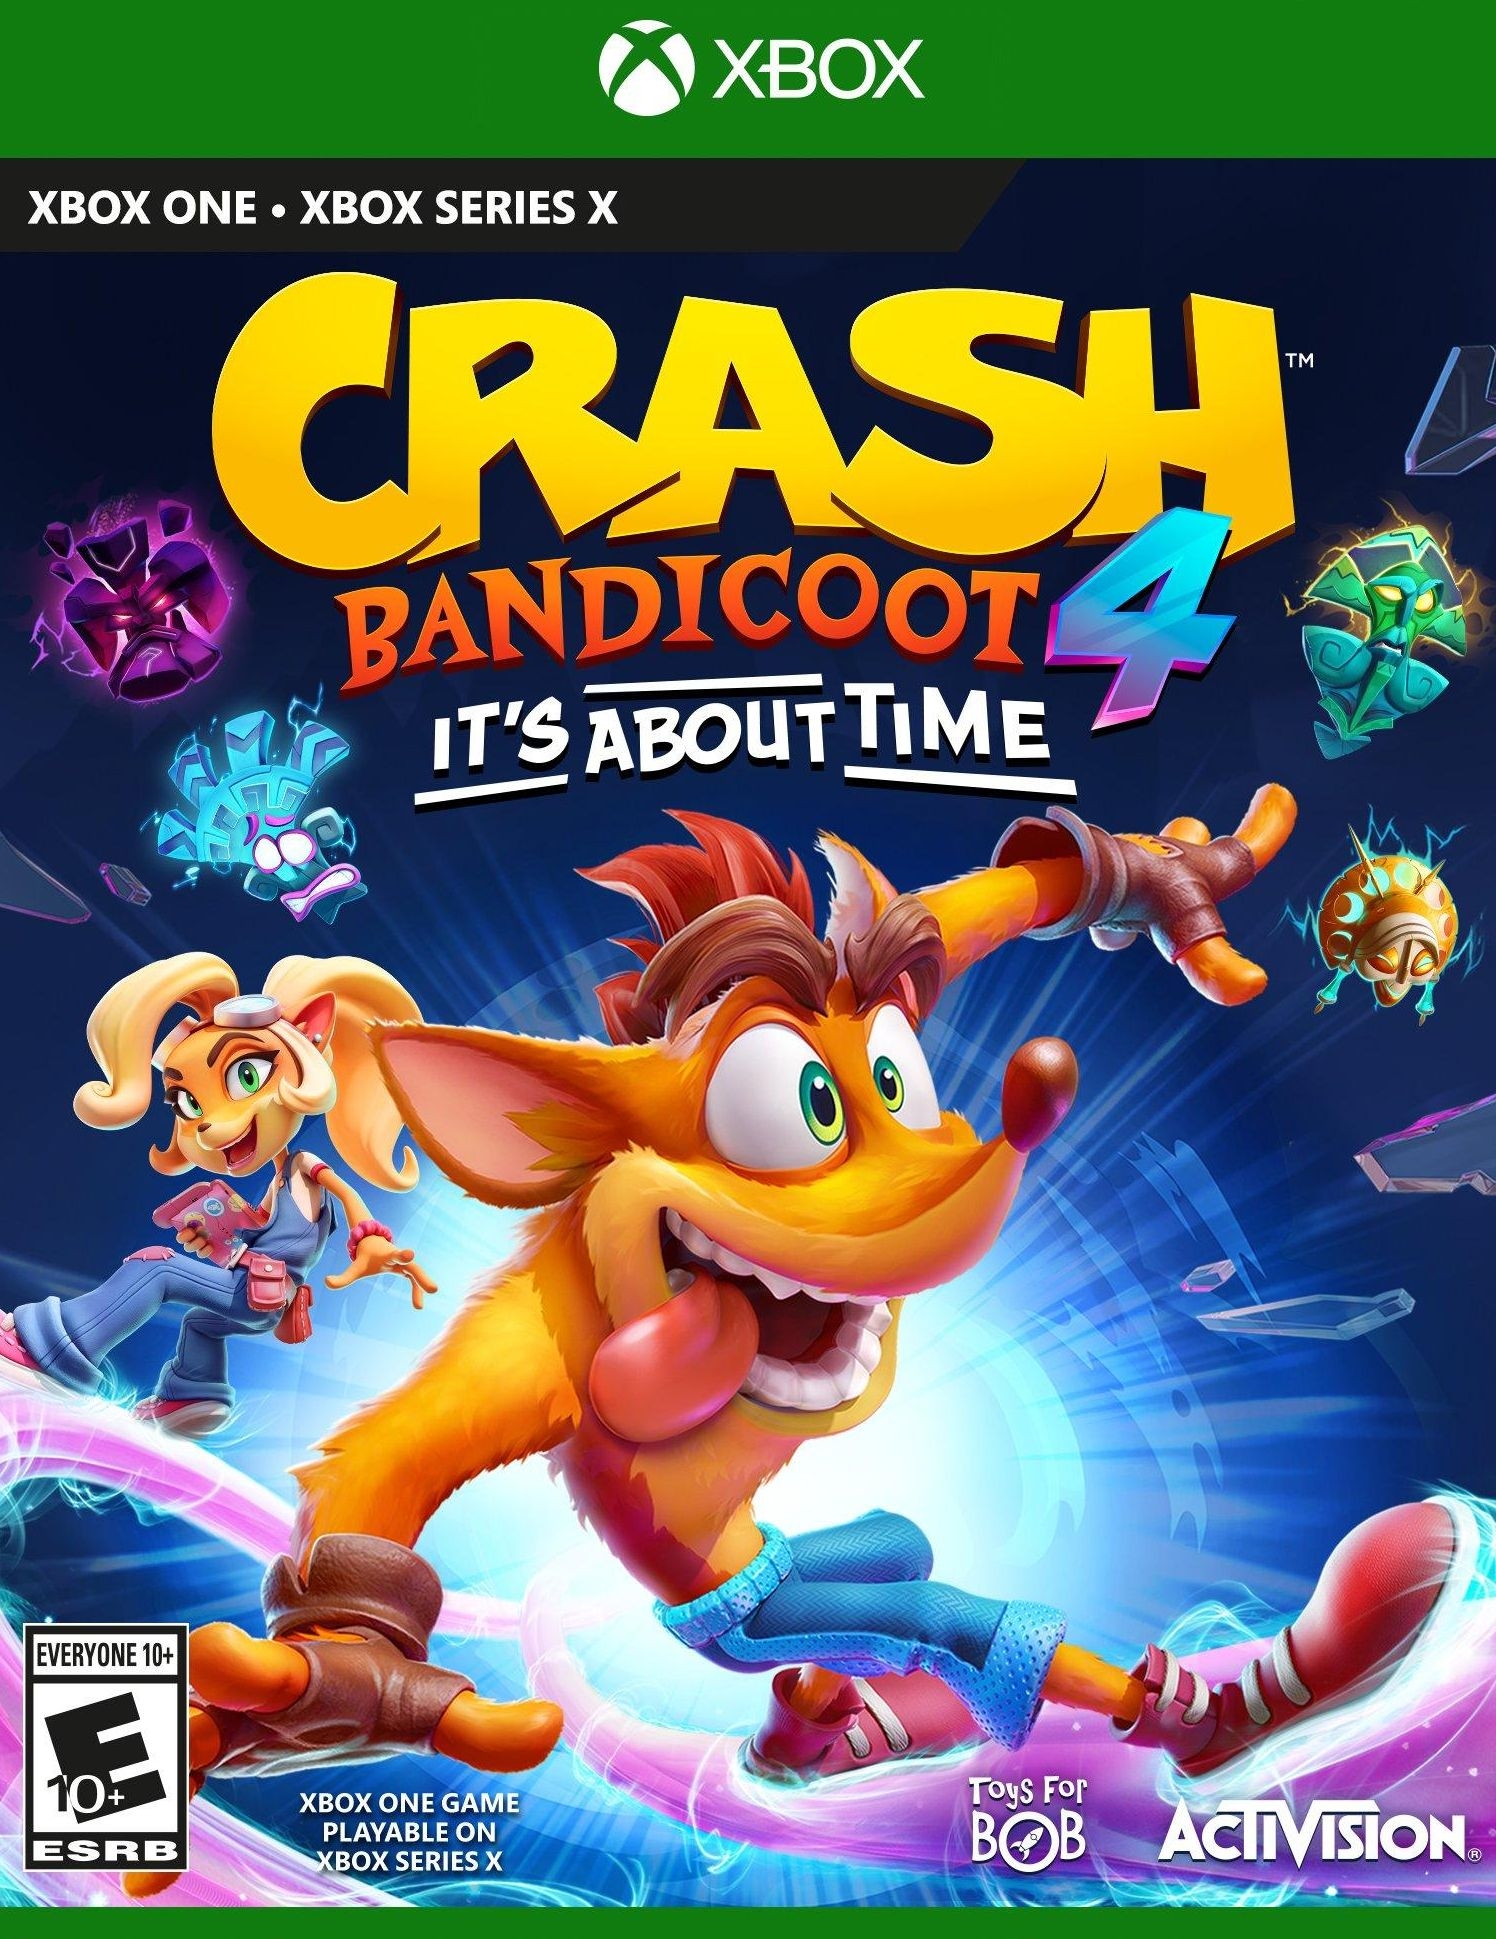 XBOXOne Crash Bandicoot 4 It’s About Time